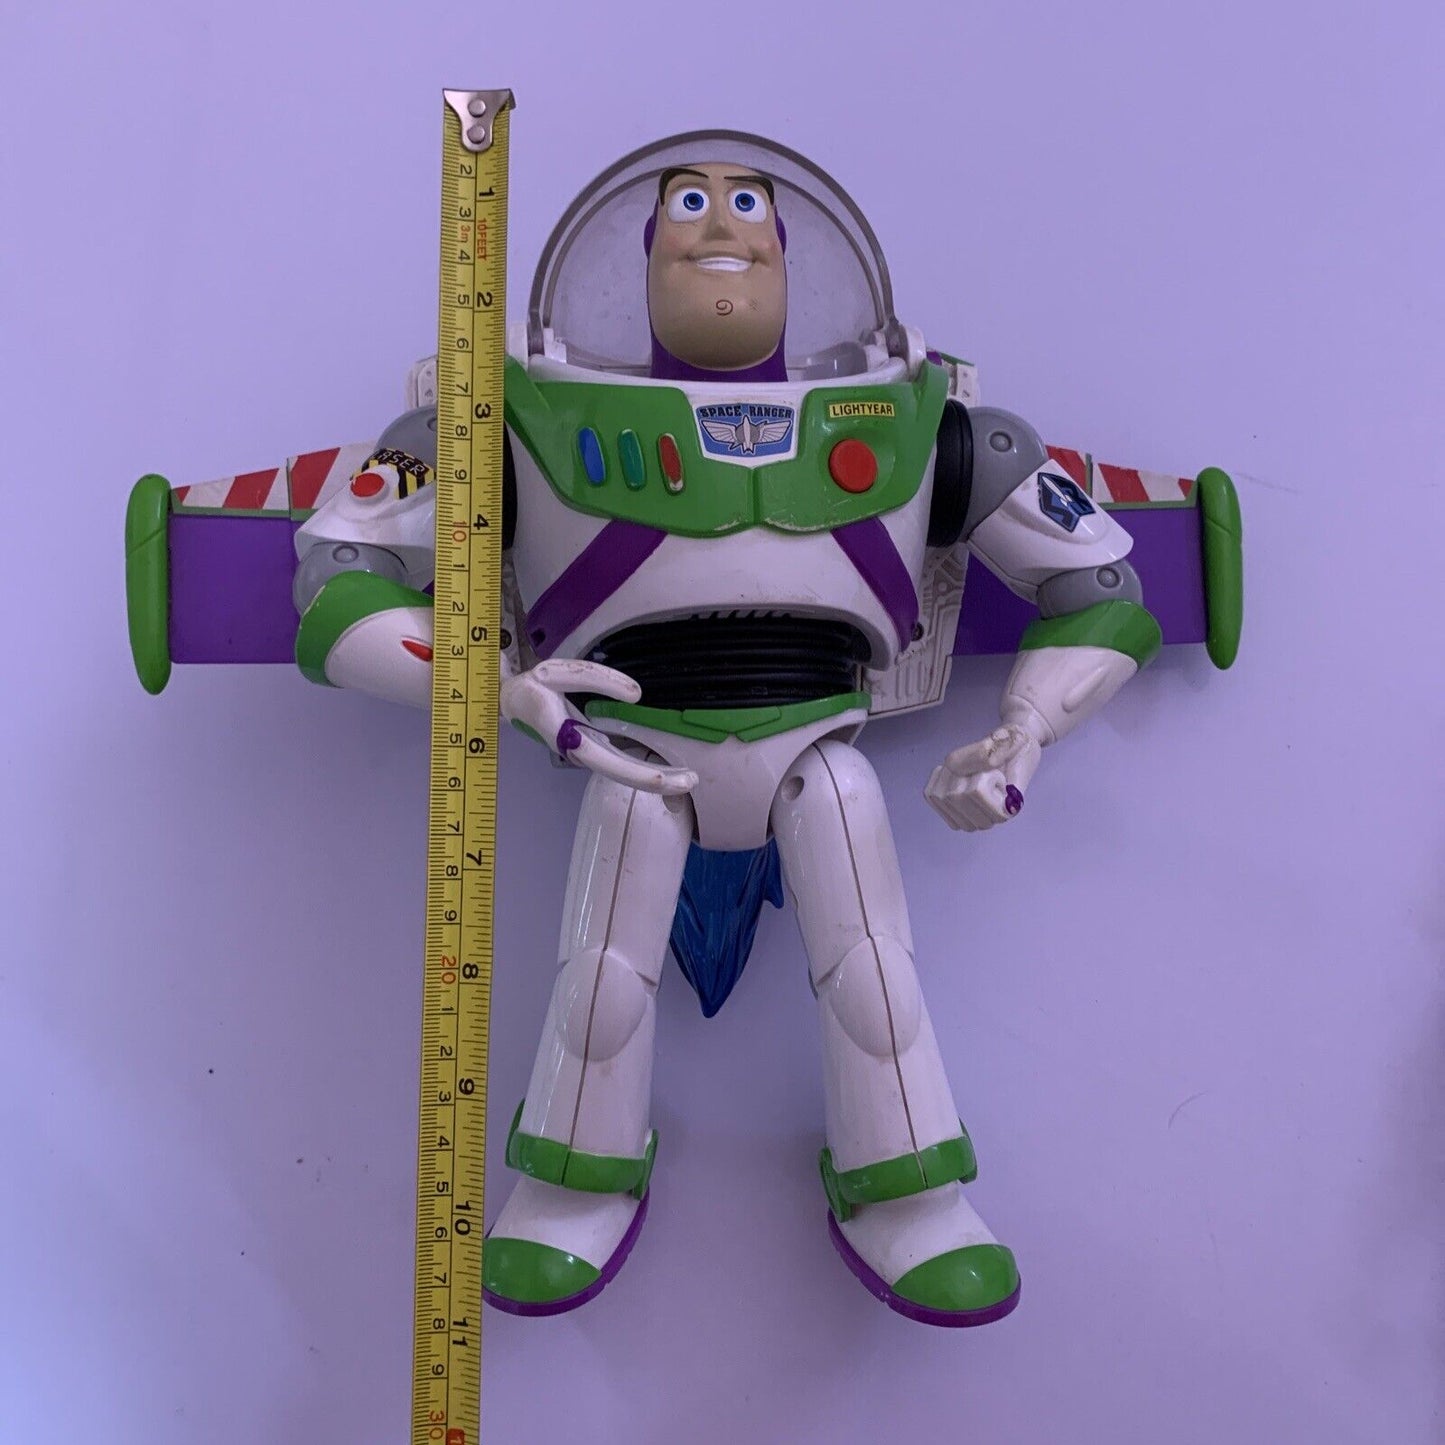 4x Toy Story Action Figure Buzz Lightyear Blue Belt Jesse